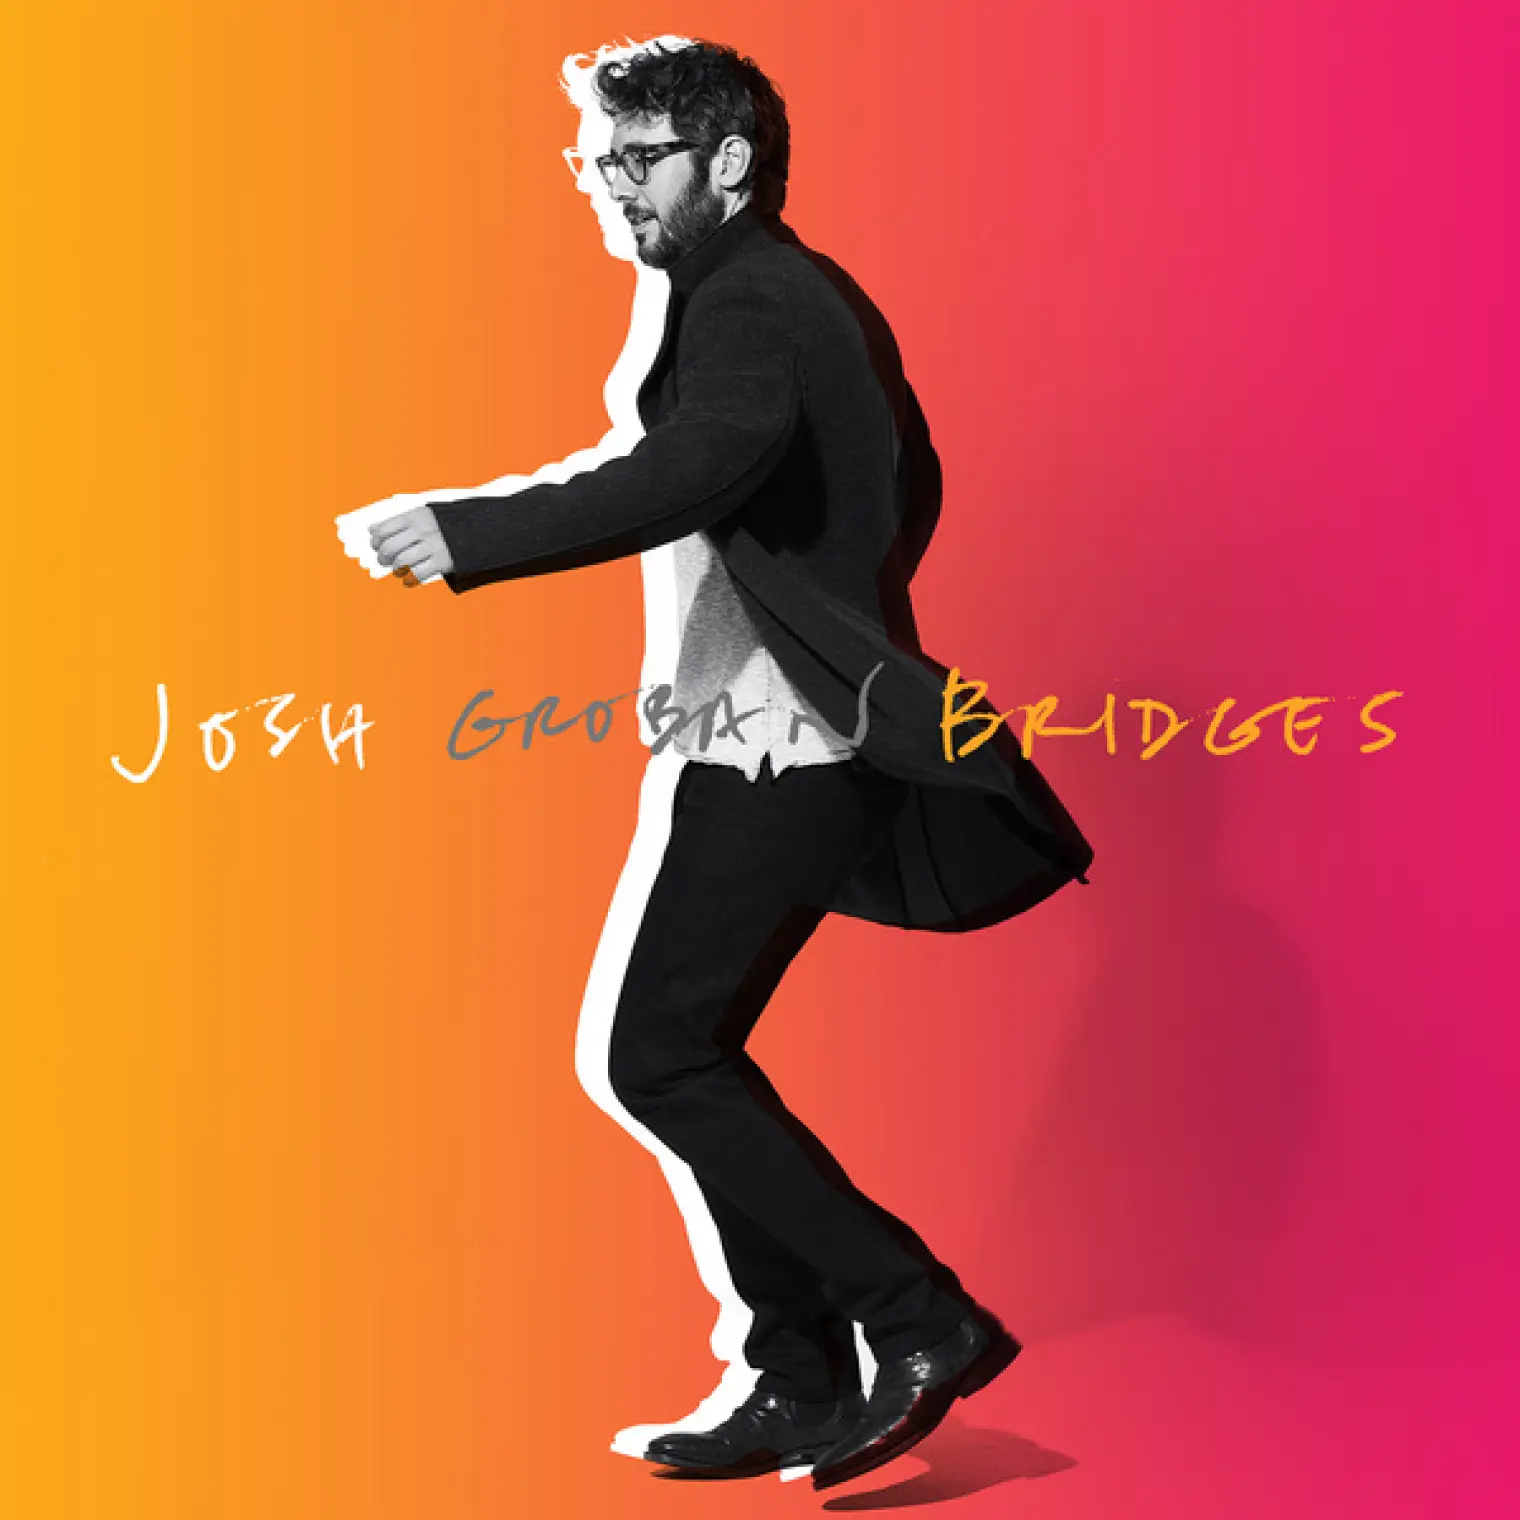 Bridges (Deluxe) -  Josh Groban 